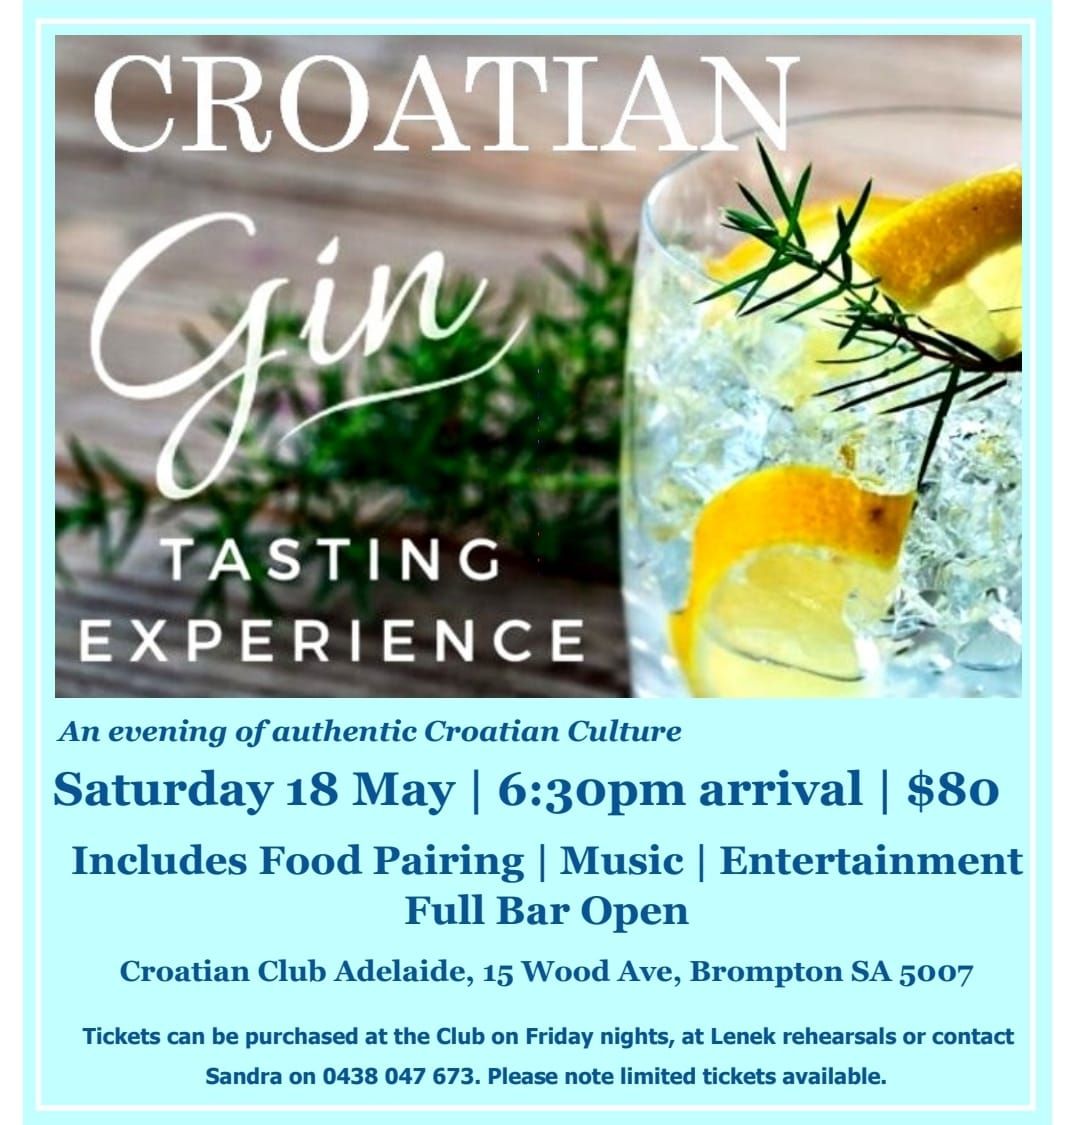 Croatian Gin Tasting Experience.